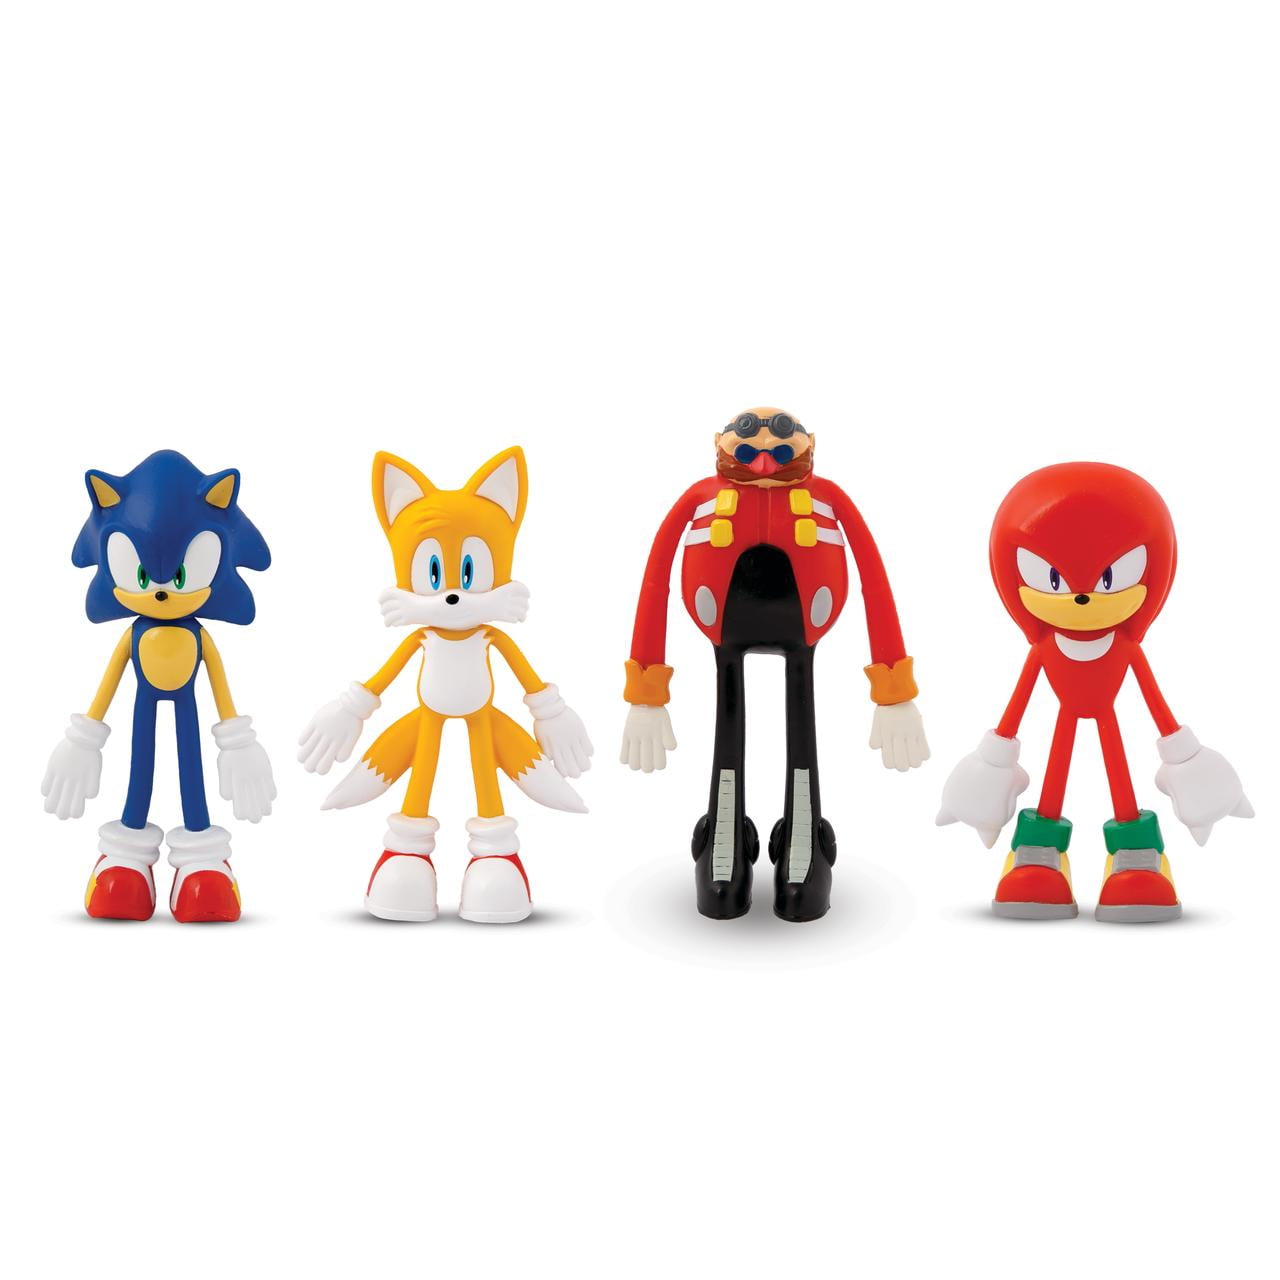 Sonic The Hedgehog 4 Wave 10 Set of 4 Figures